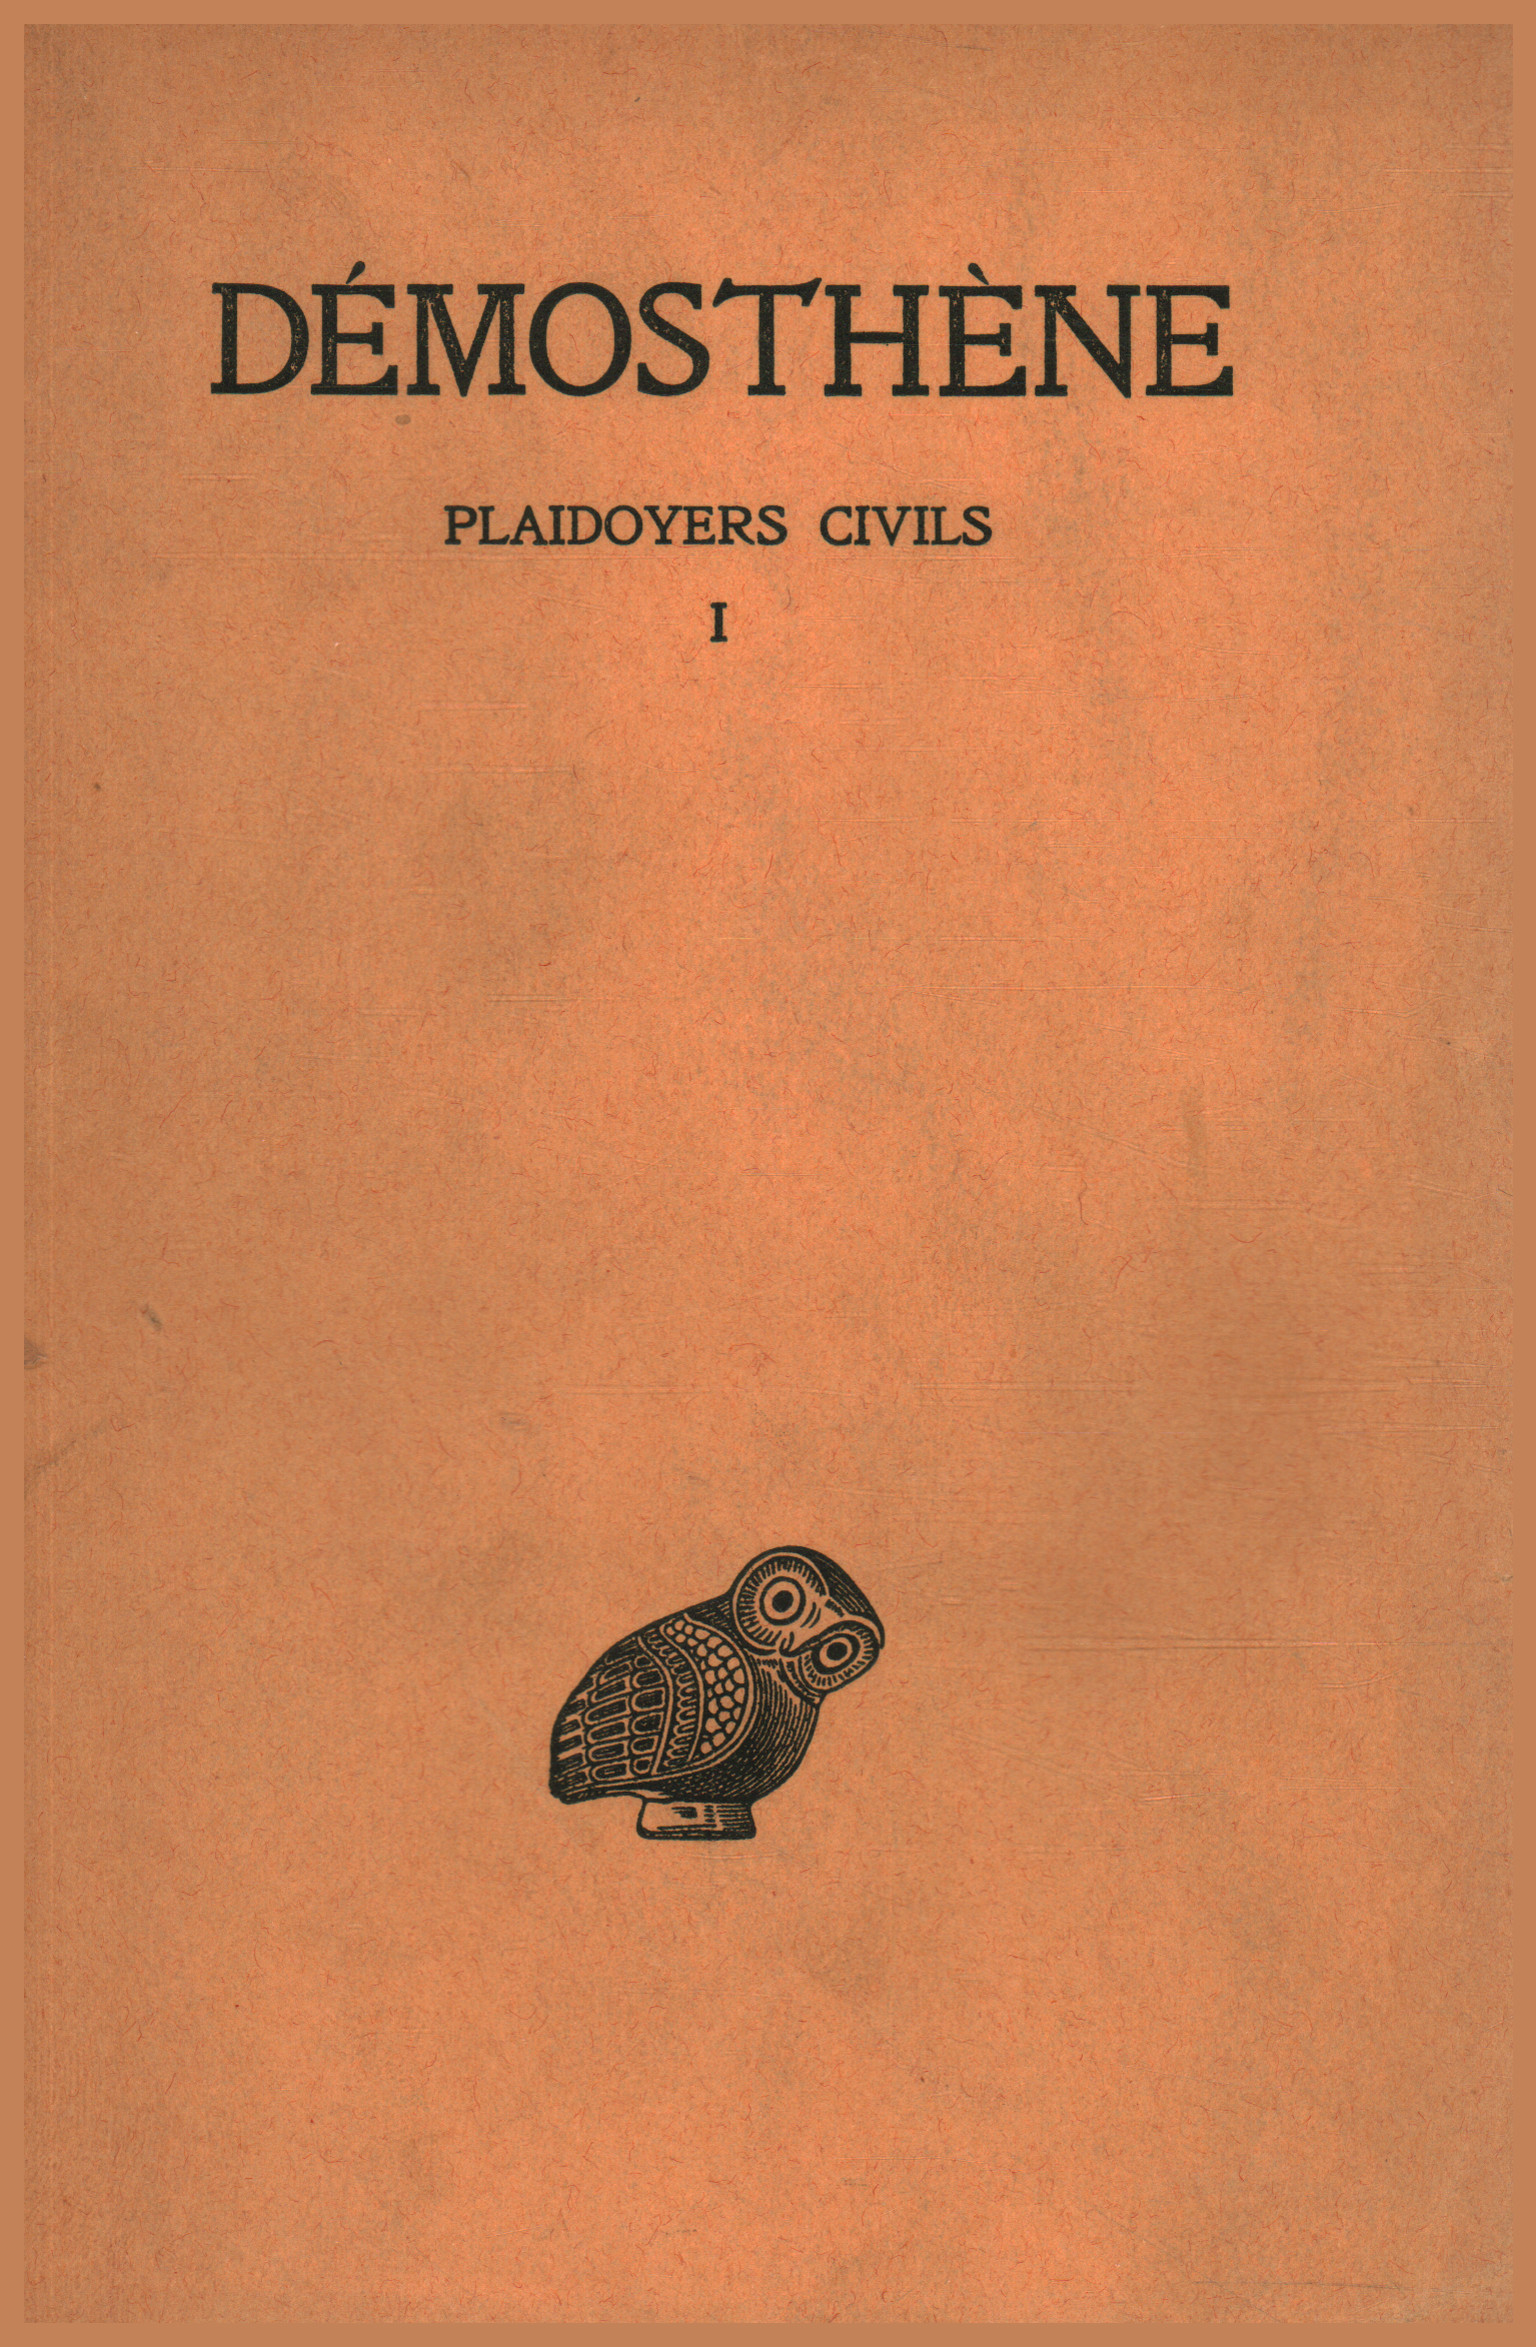 Plaidoyers Civils Tome I, Demosthenes